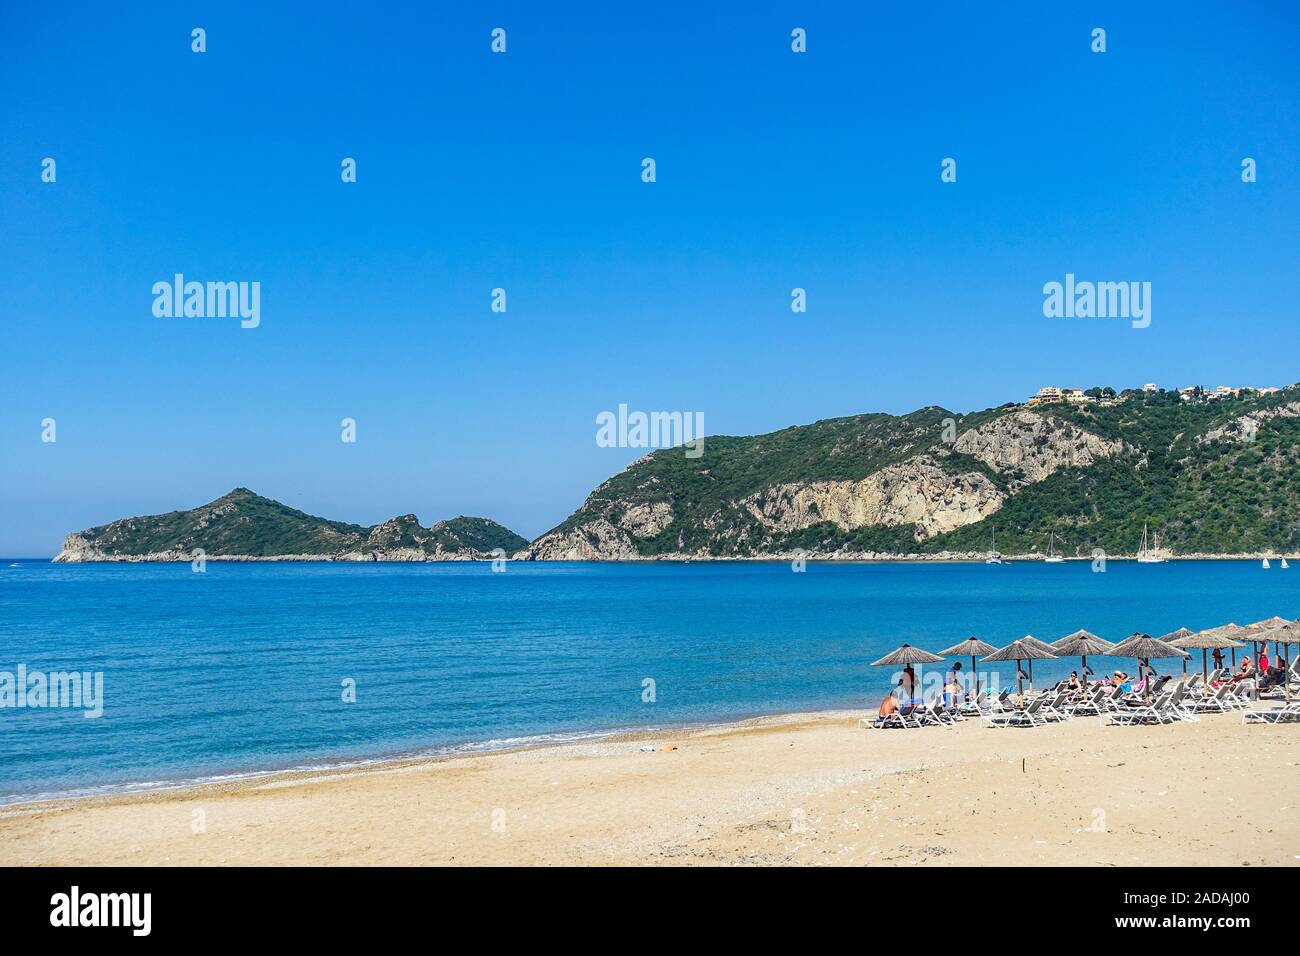 The bay of Agions Geoergios Pagi, a popular tourist destination, Corfu, Greece Stock Photo